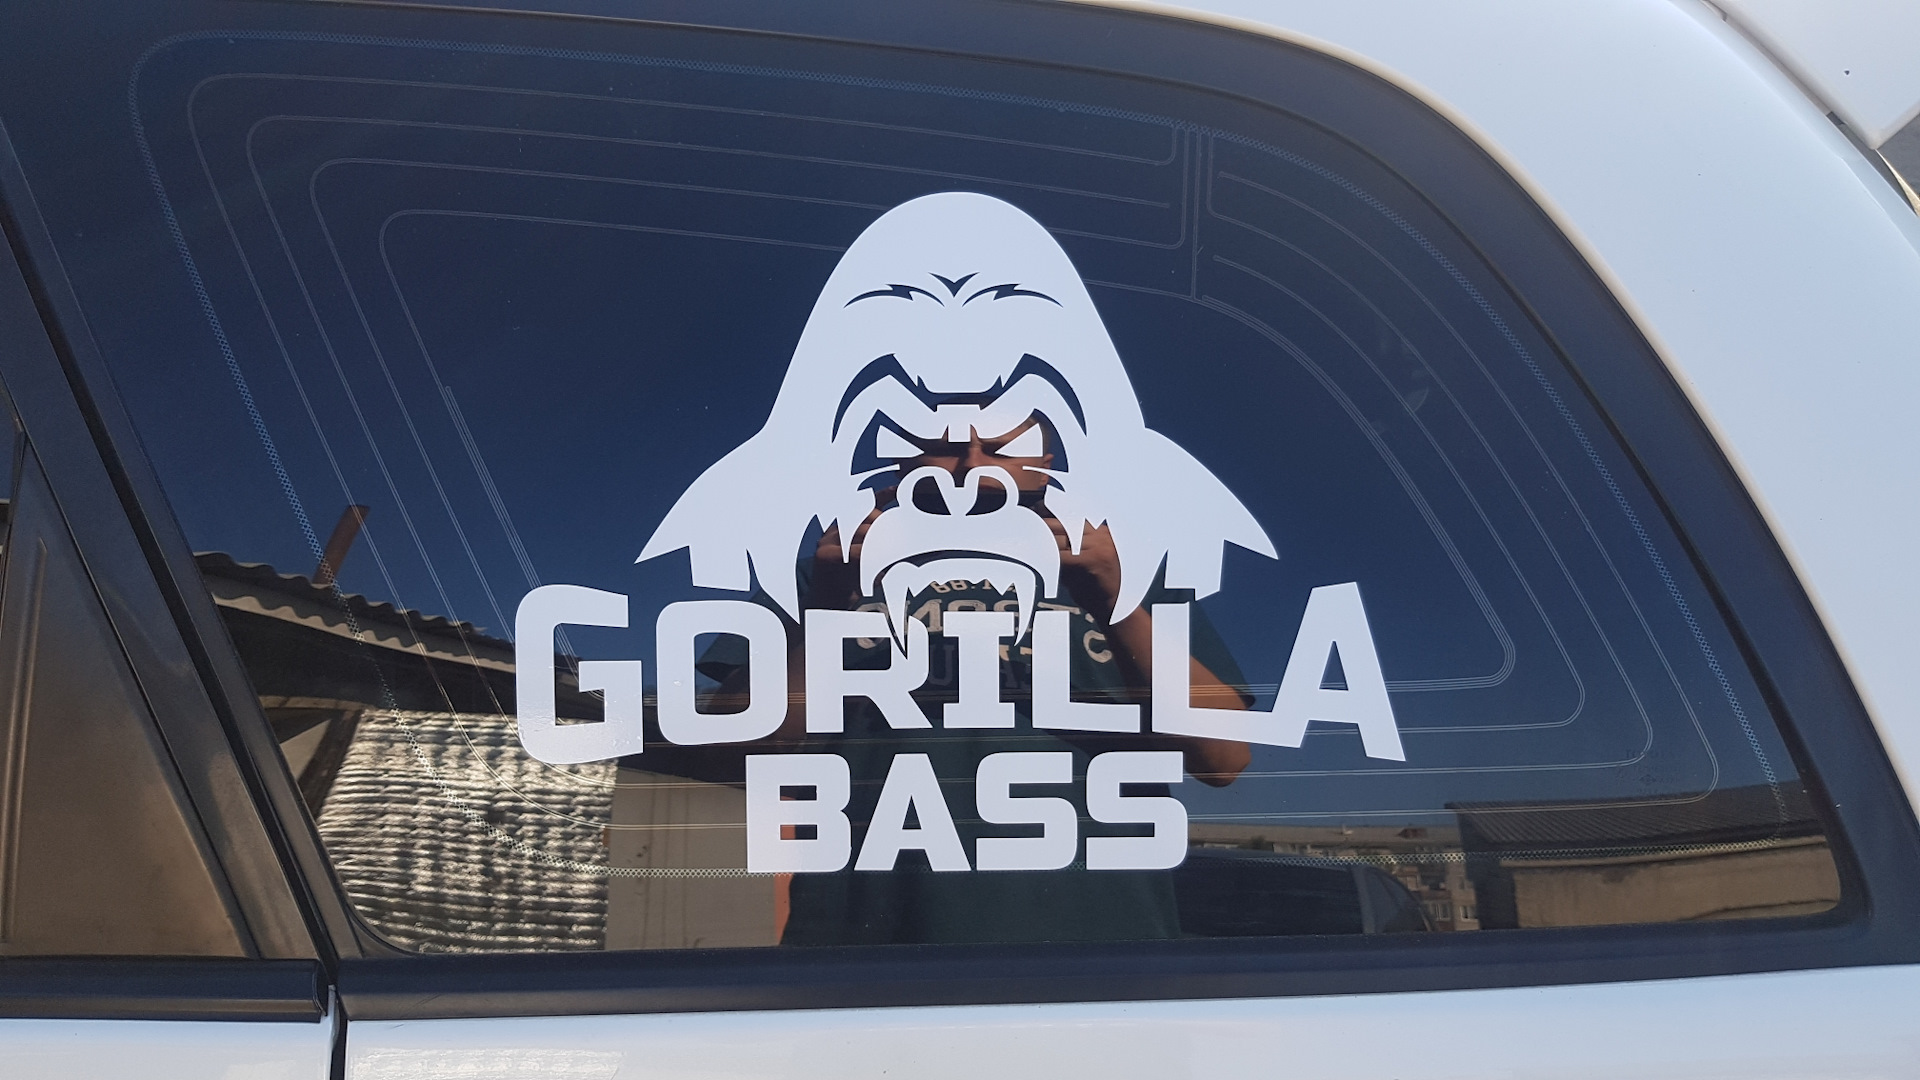 Сказки басс. Наклейка горилла басс. Наклейка Bass. Наклейки на авто басс. Наклейки на авто Bass.